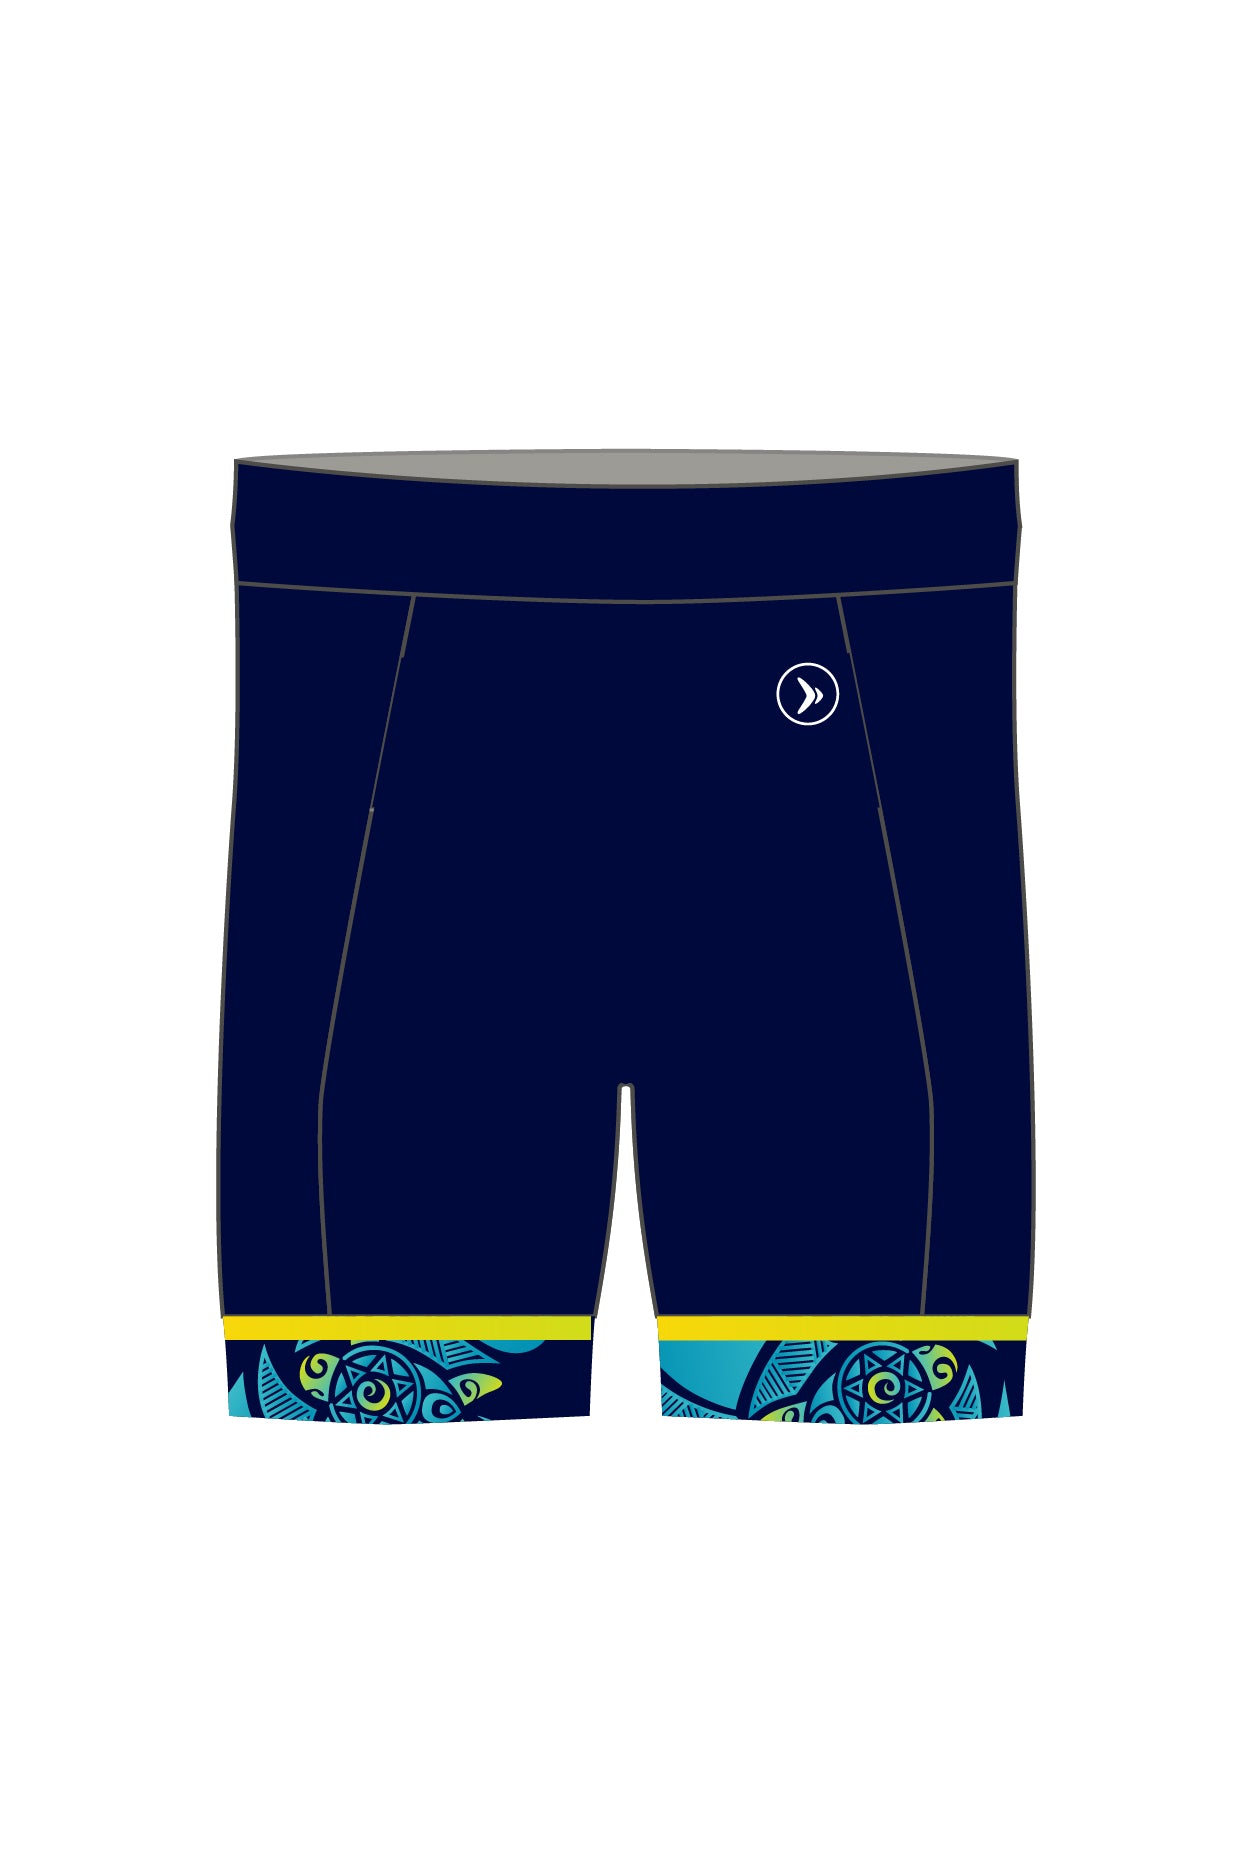 Townsville Tri Club Men's Tri Shorts